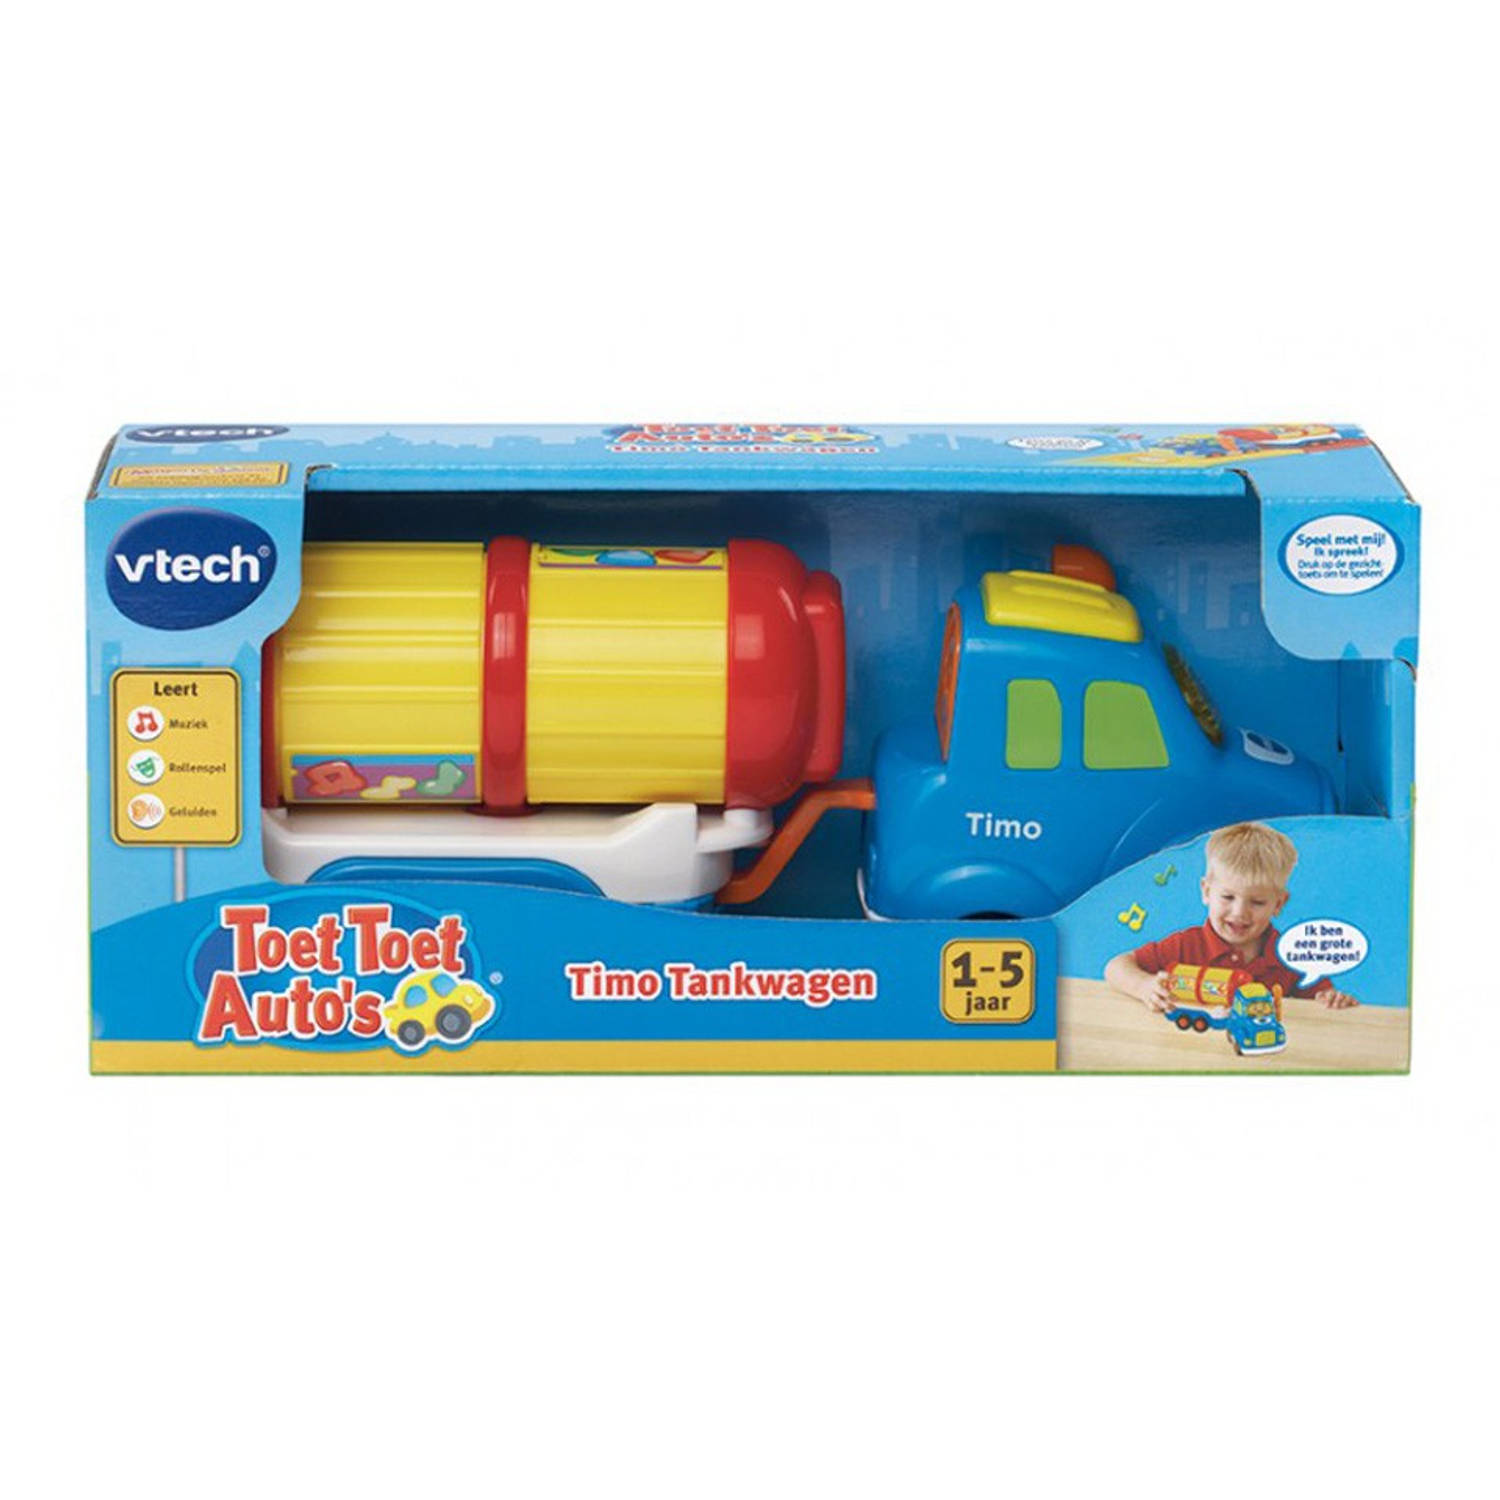 Hamburger Bedankt idioom VTech Toet Toet Auto's Timo Tankwagen | Blokker